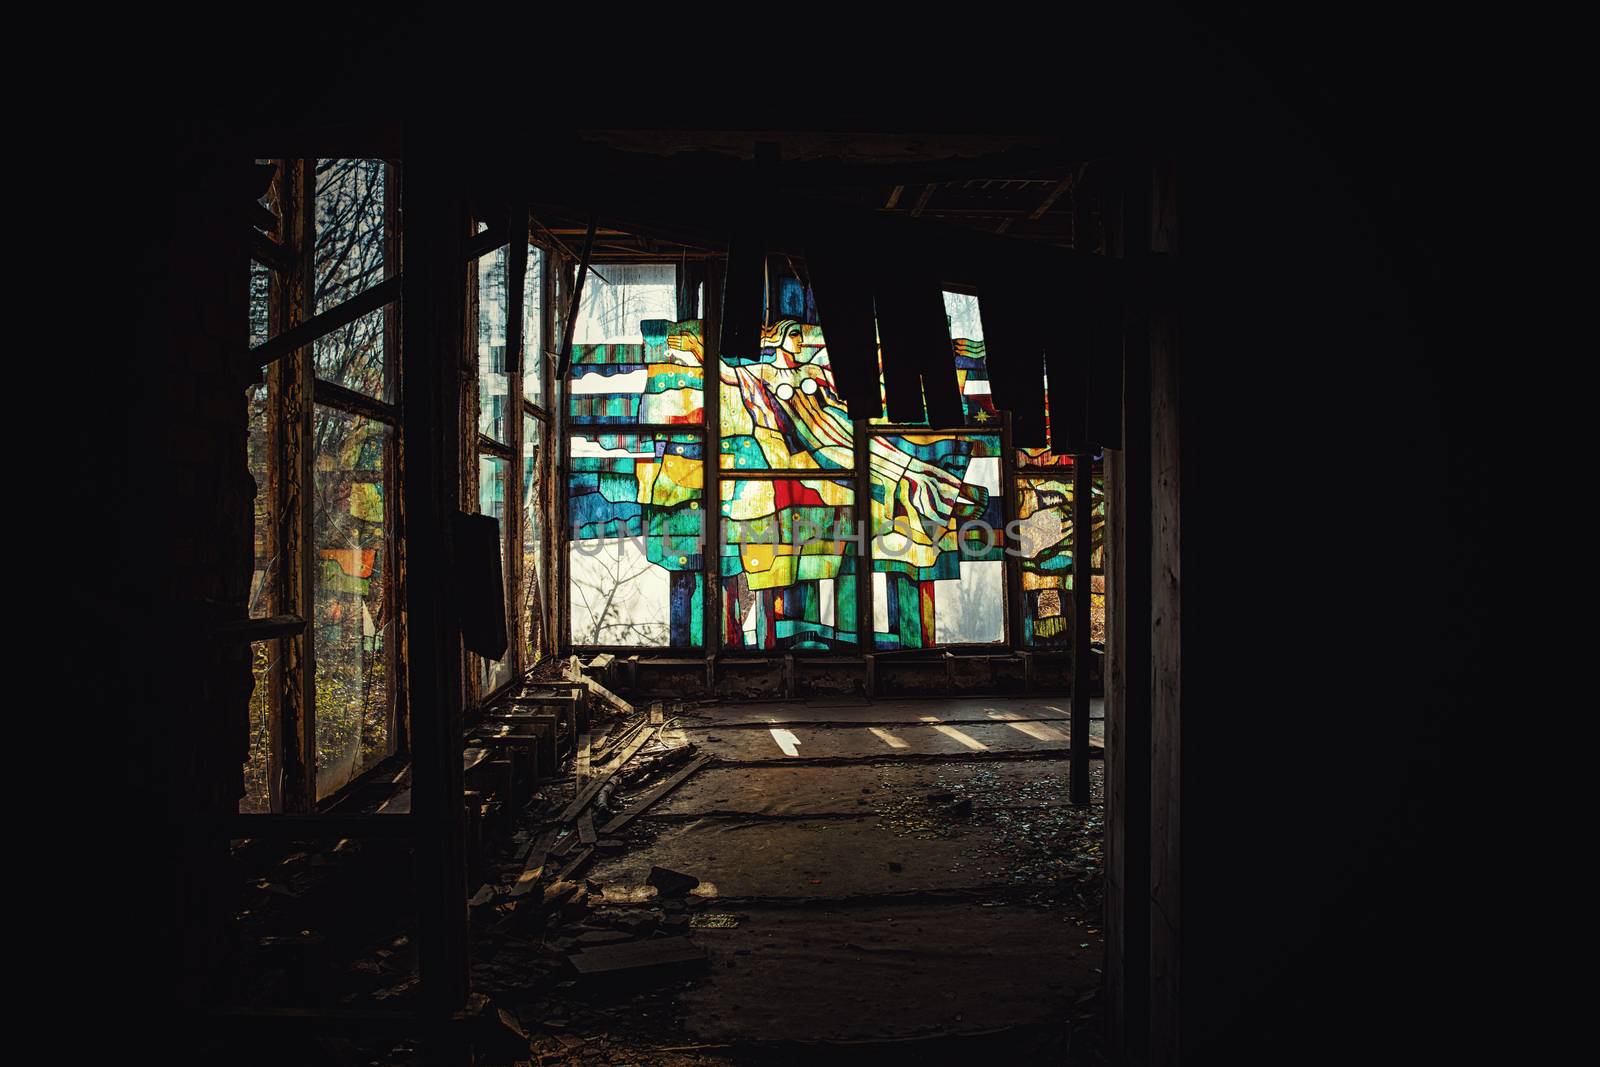 Large windows in Pripyat City, Chernobyl Exclusion Zone 2019 closeup